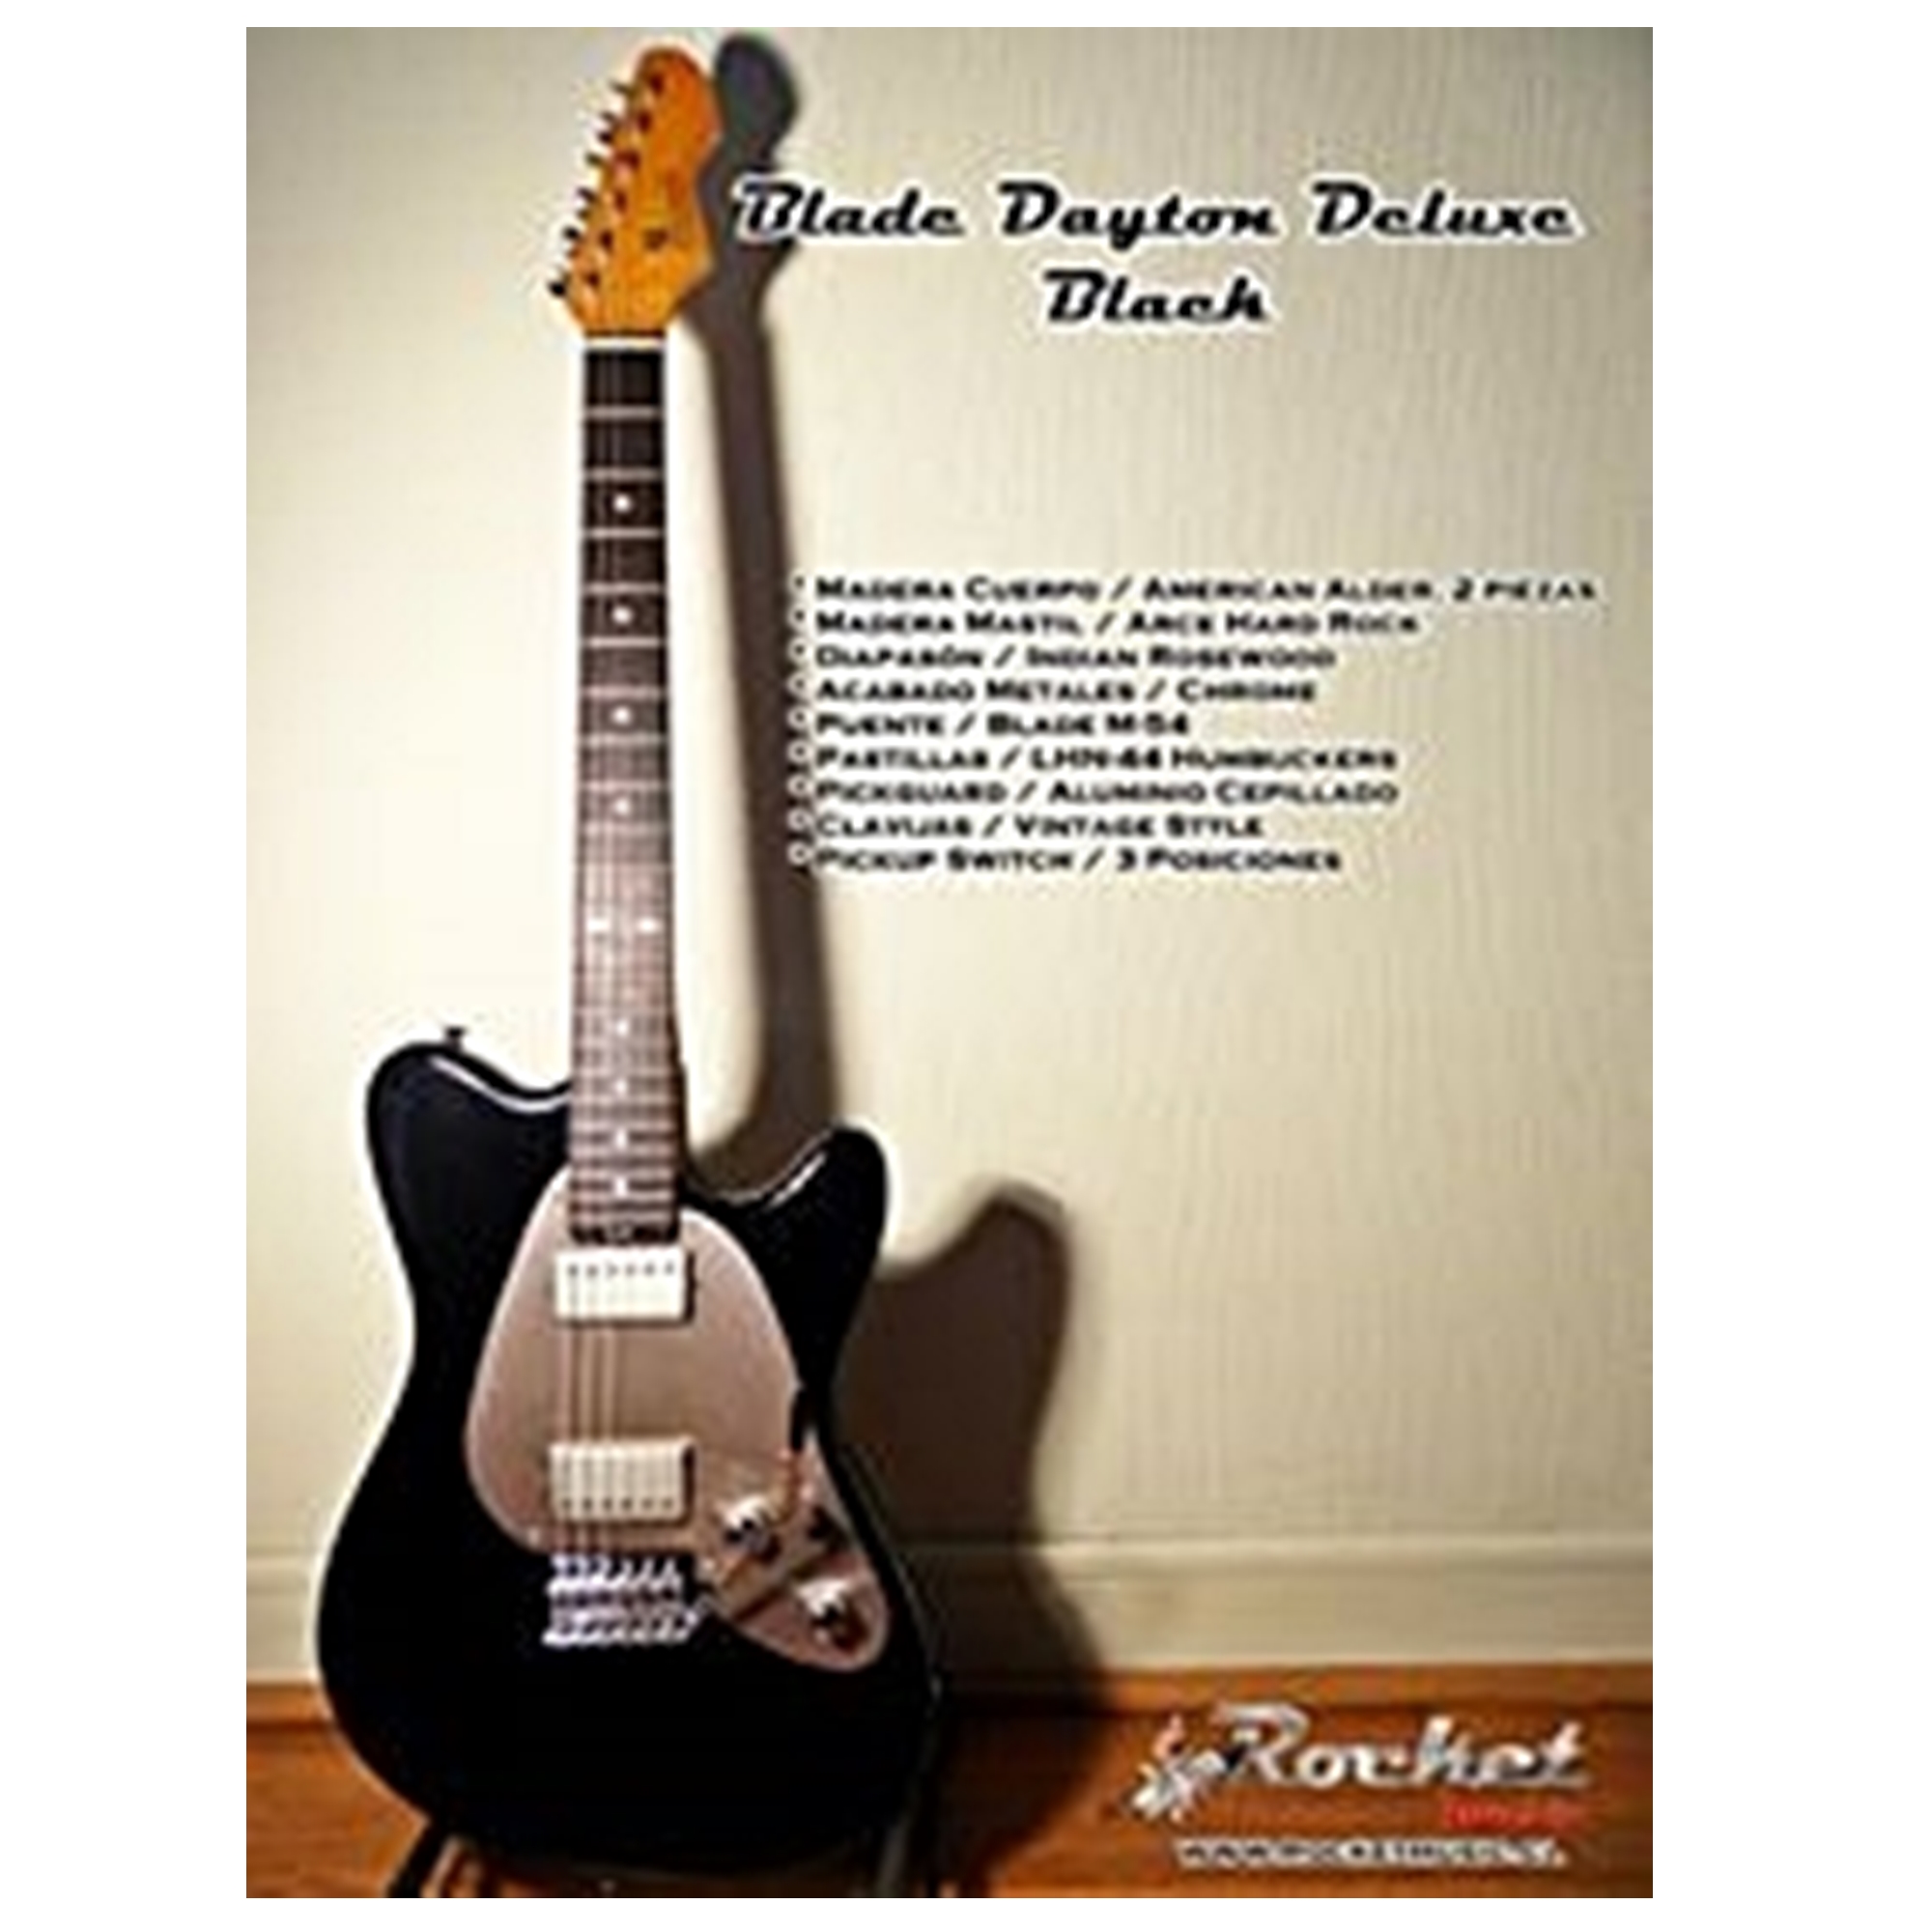 Blade Dayton Deluxe / Black